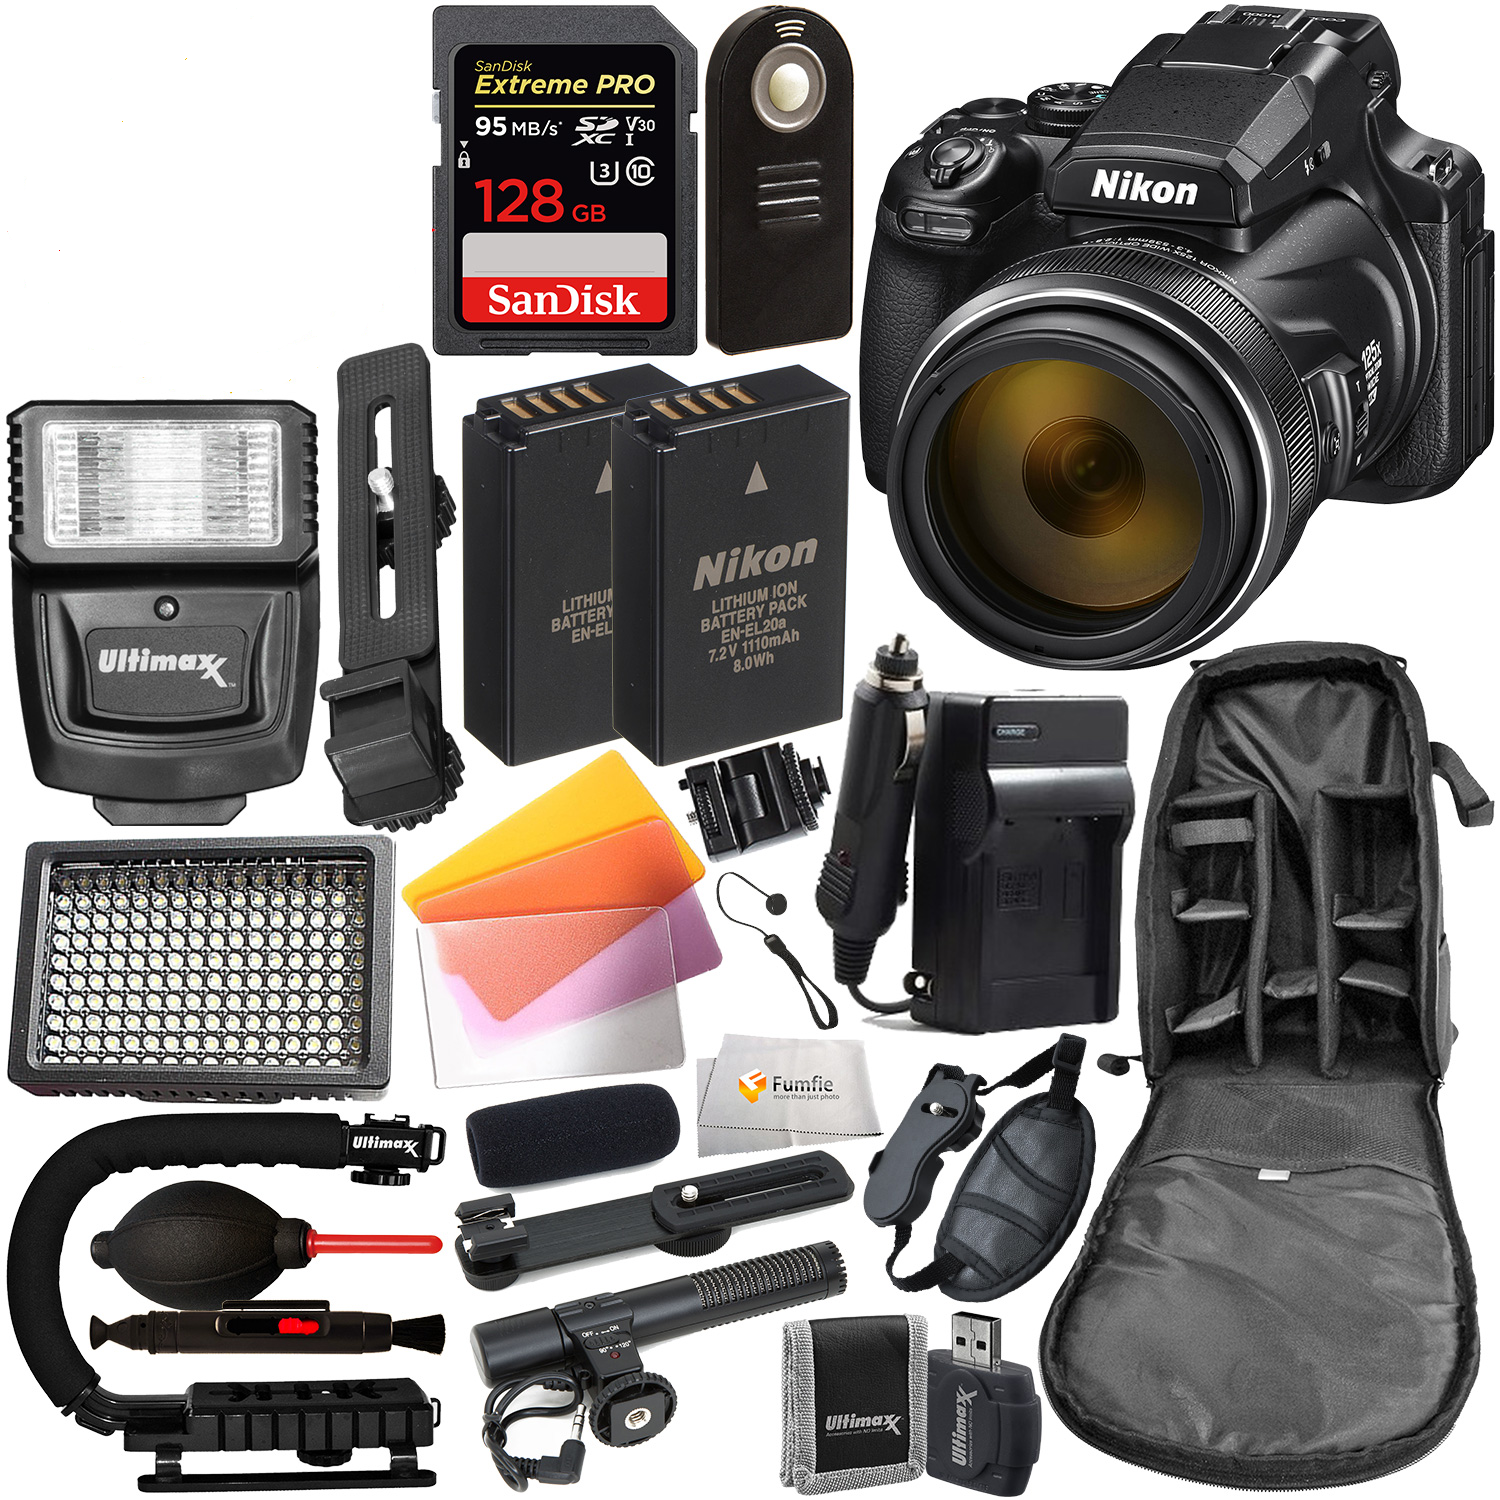 Nikon COOLPIX P1000 Digital Camera with Deluxe Accessory Bundle